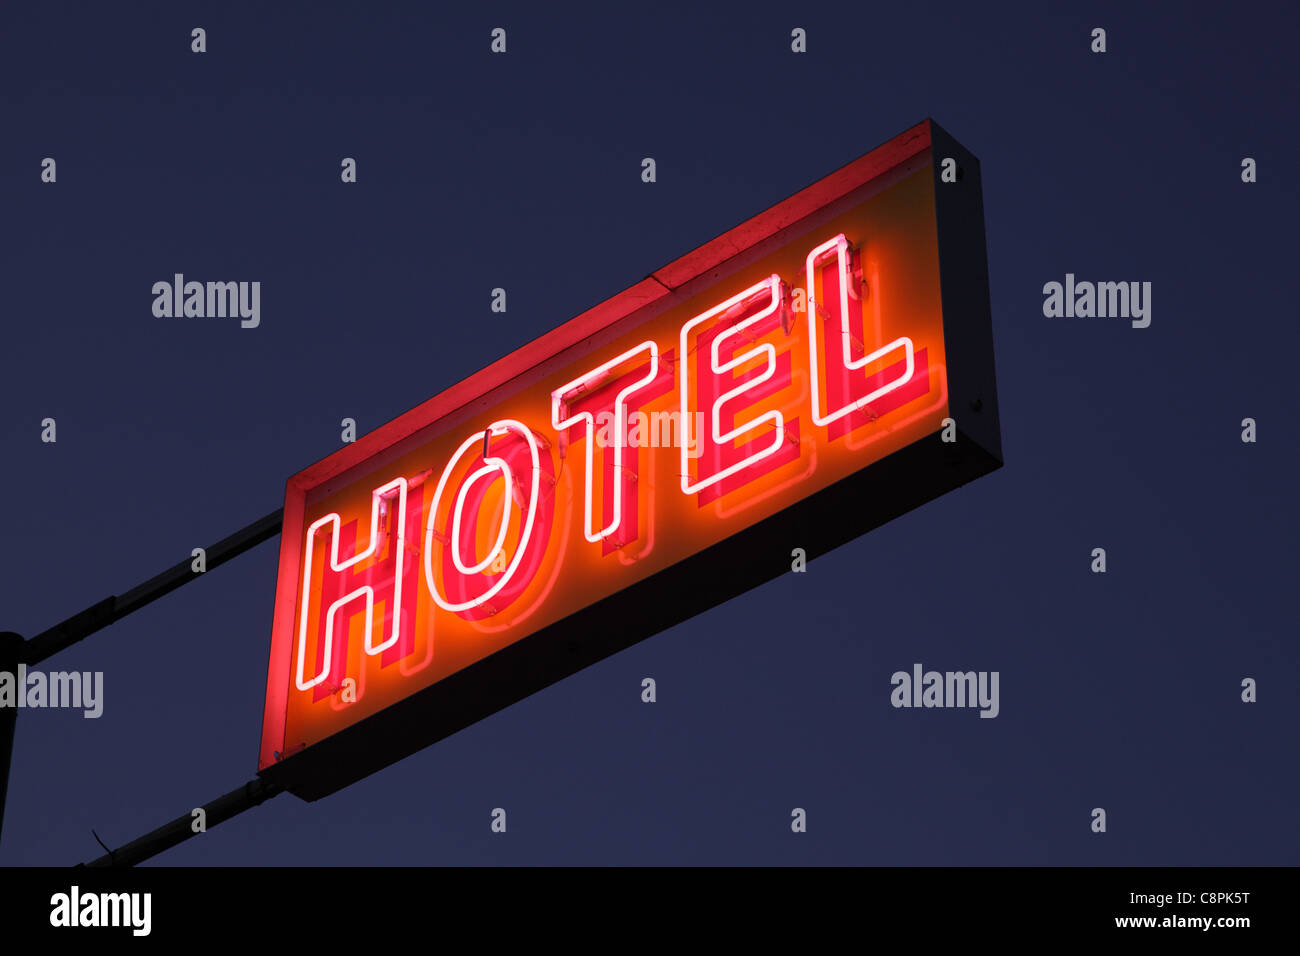 Hotel sign illuminated at night Stock Photo